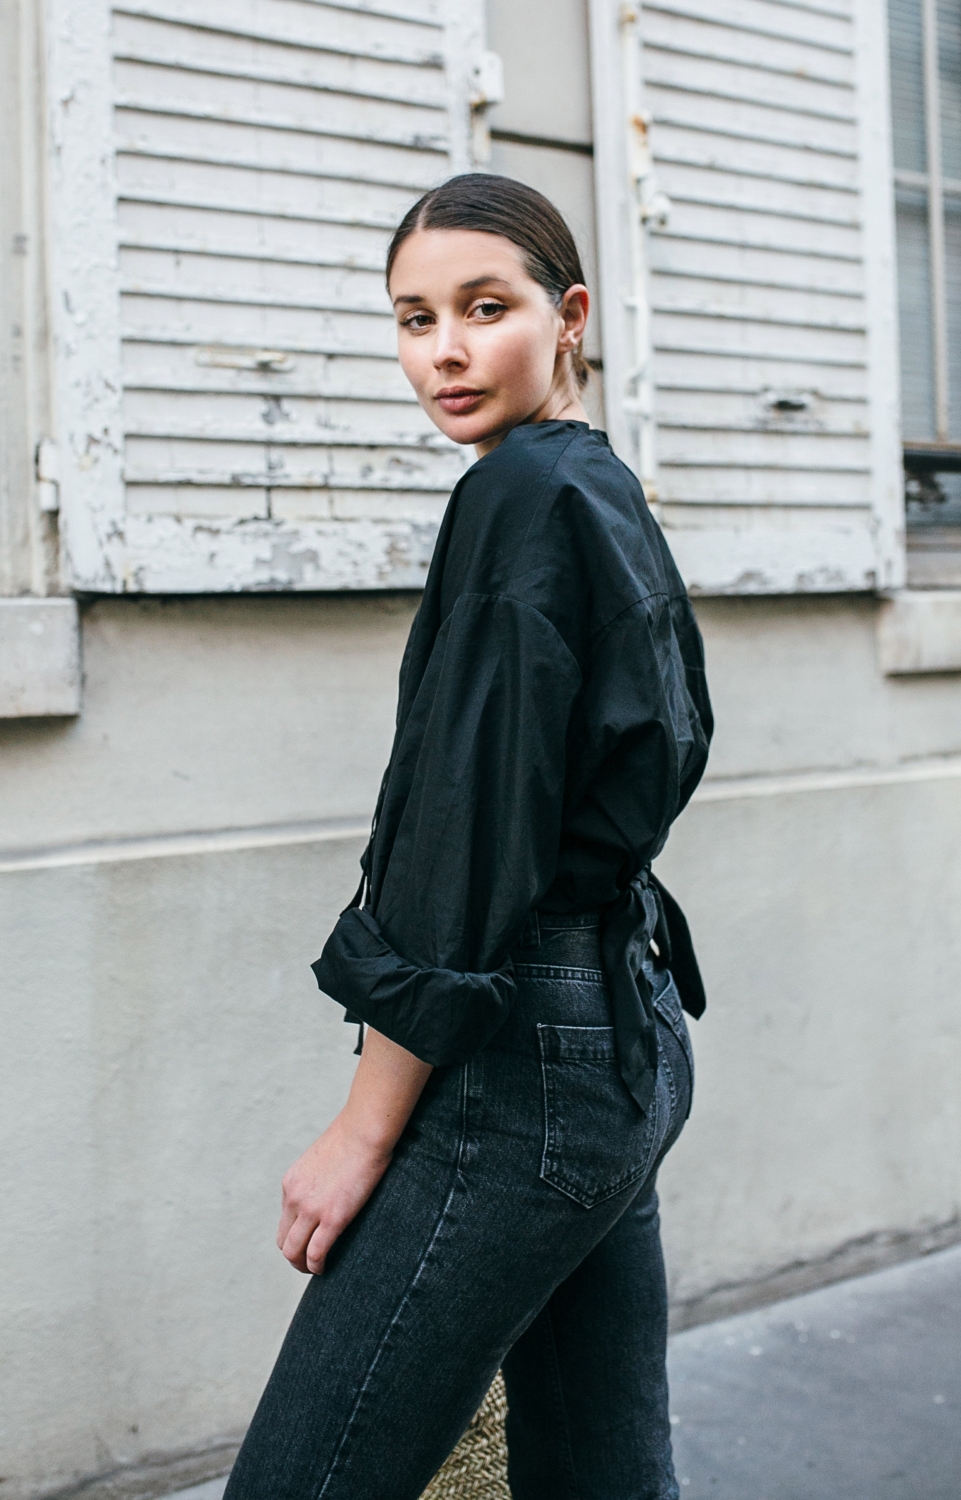 wicker basket bag | rachel comey slim legion jeans | Tome shirt | Style | Outfit | HarperandHarley